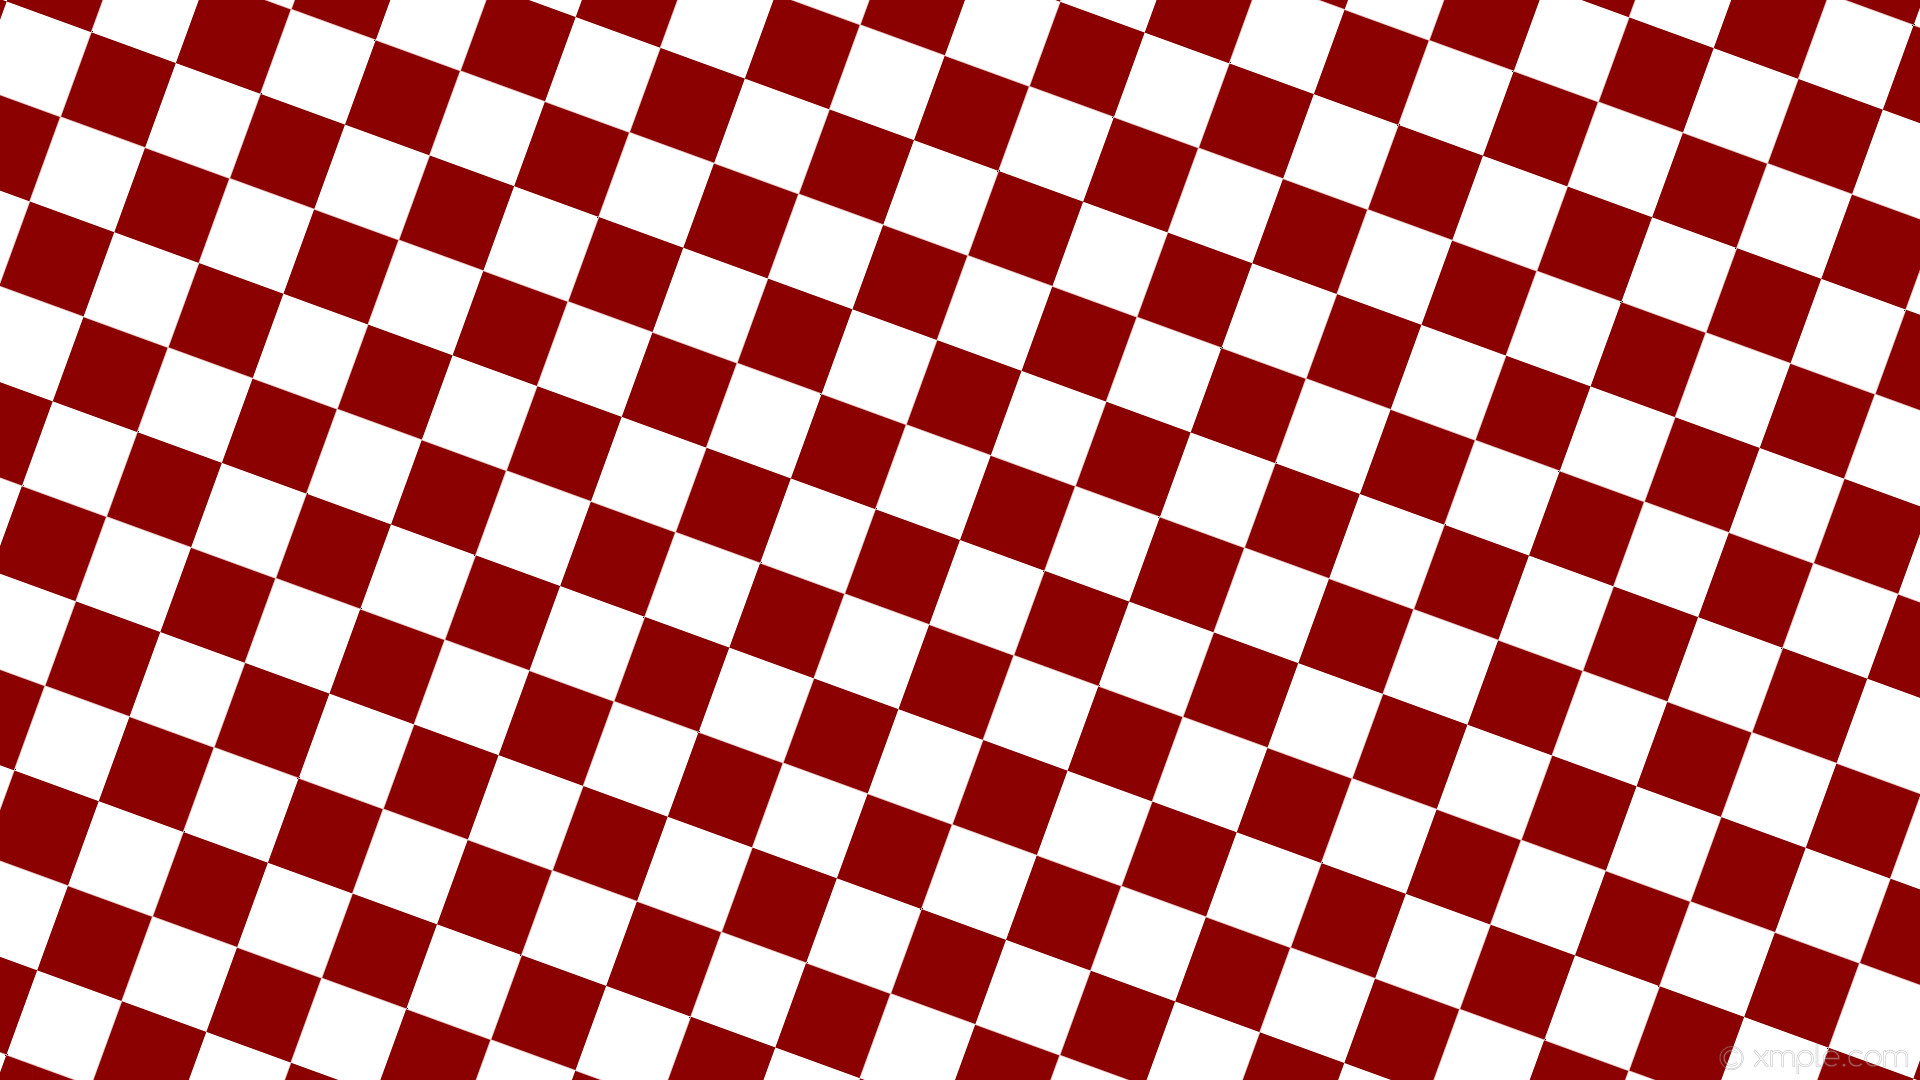 1920x1080 wallpaper checkered squares red white dark red #8b0000 #ffffff diagonal 70Â°  90px